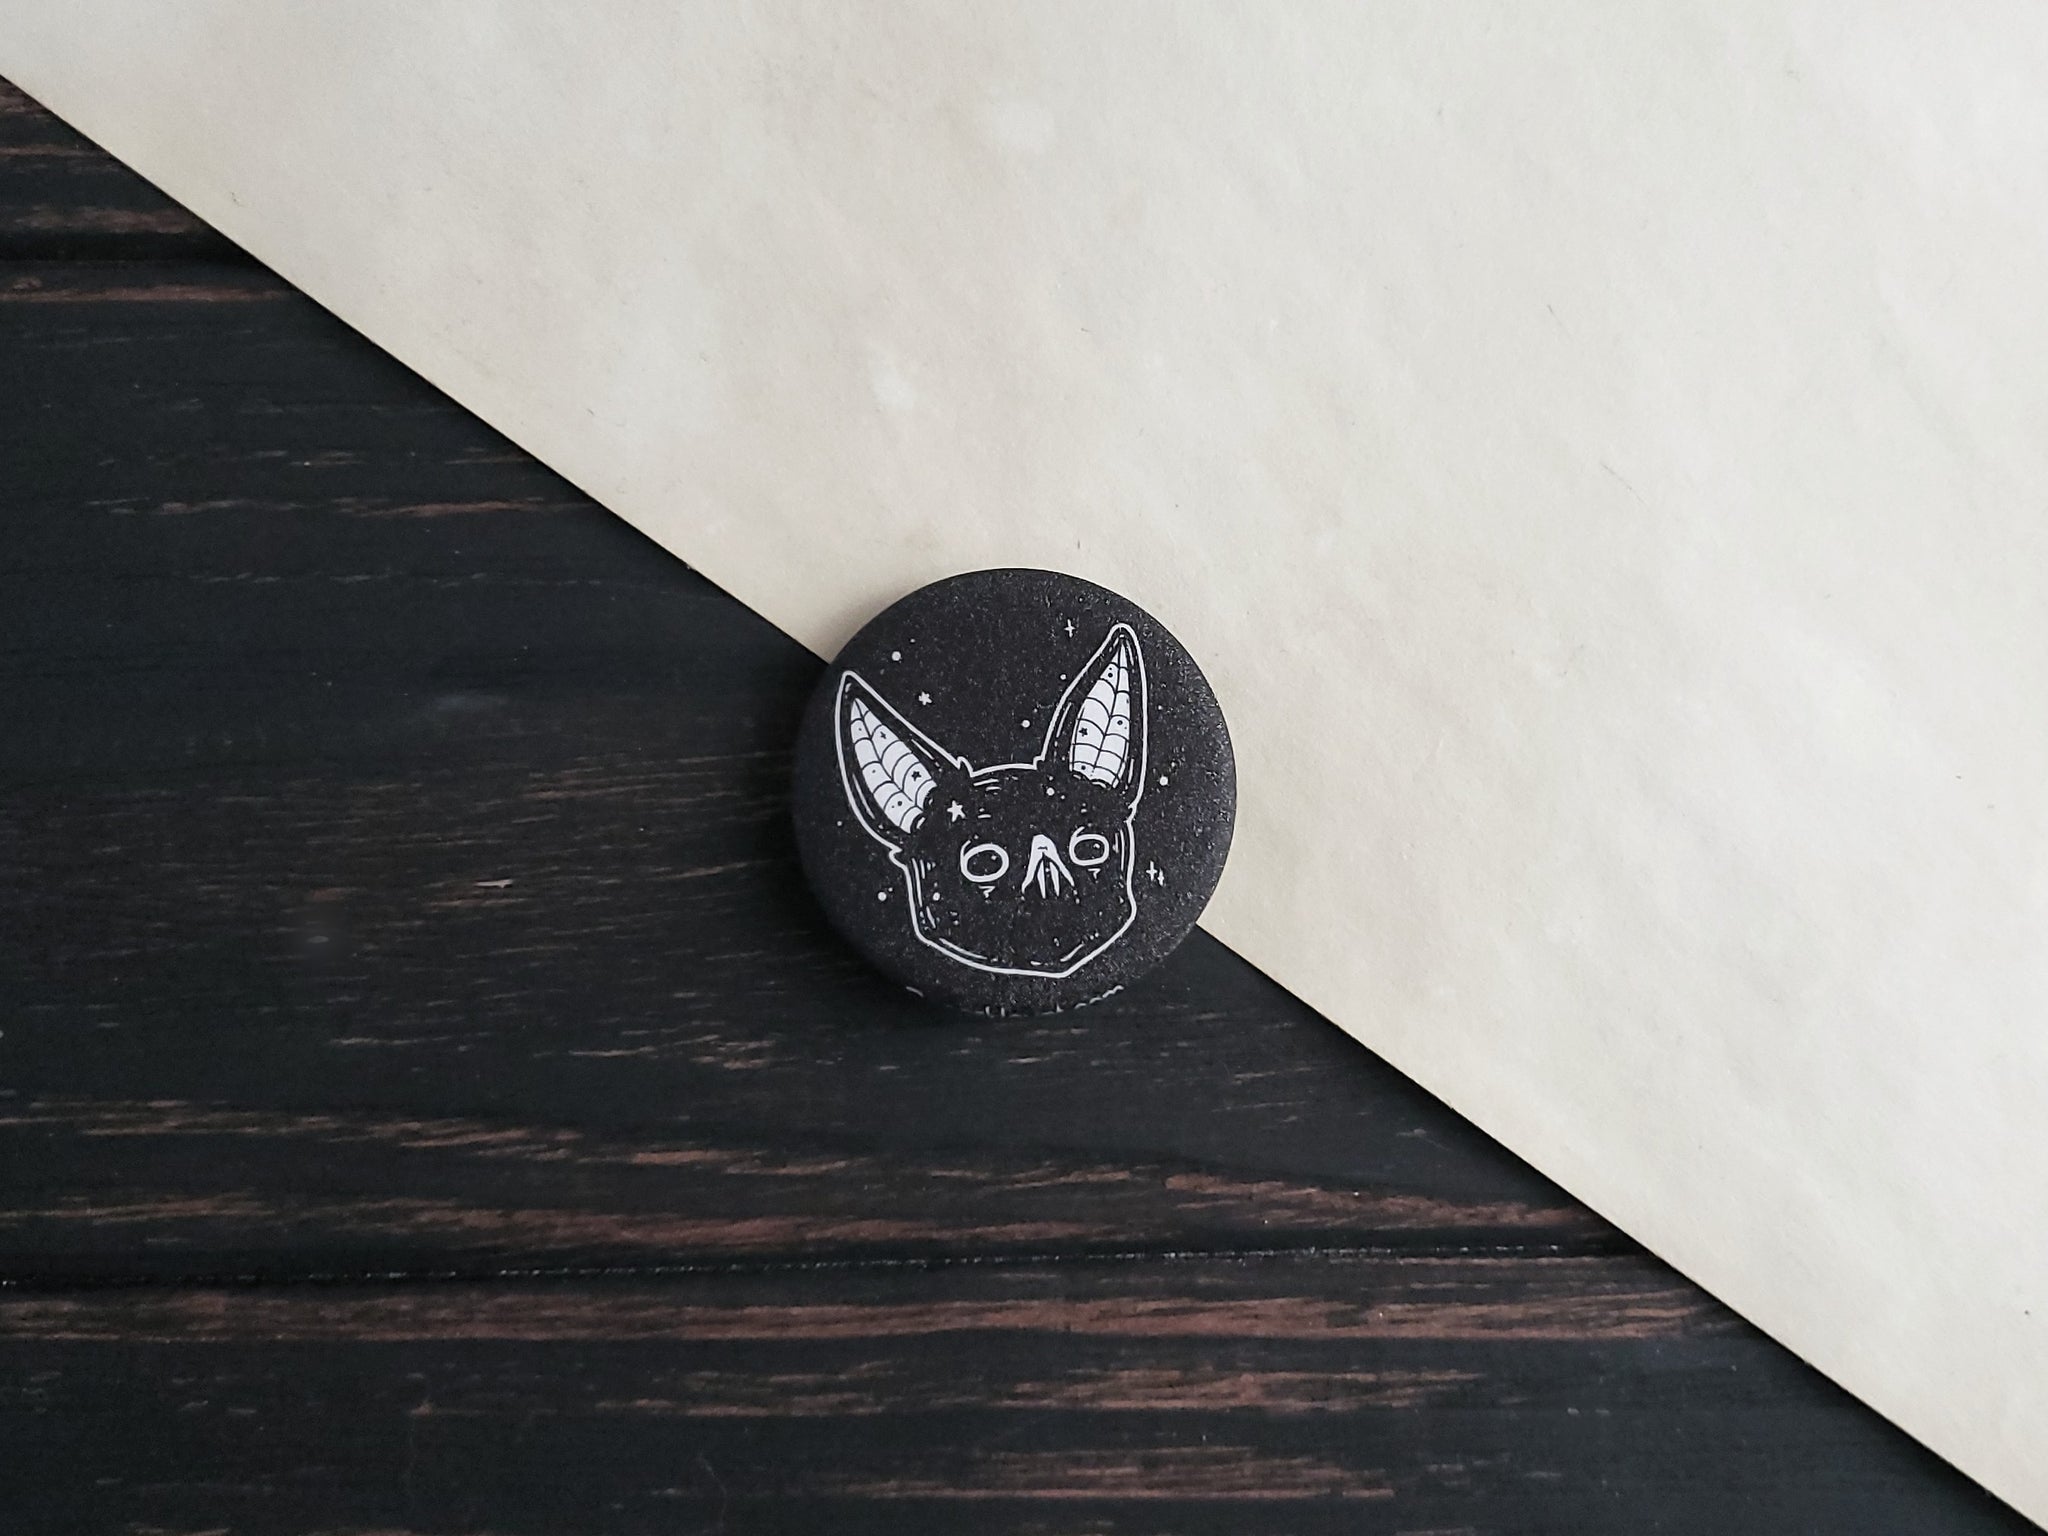 Vampire bat pin button badge - y tho